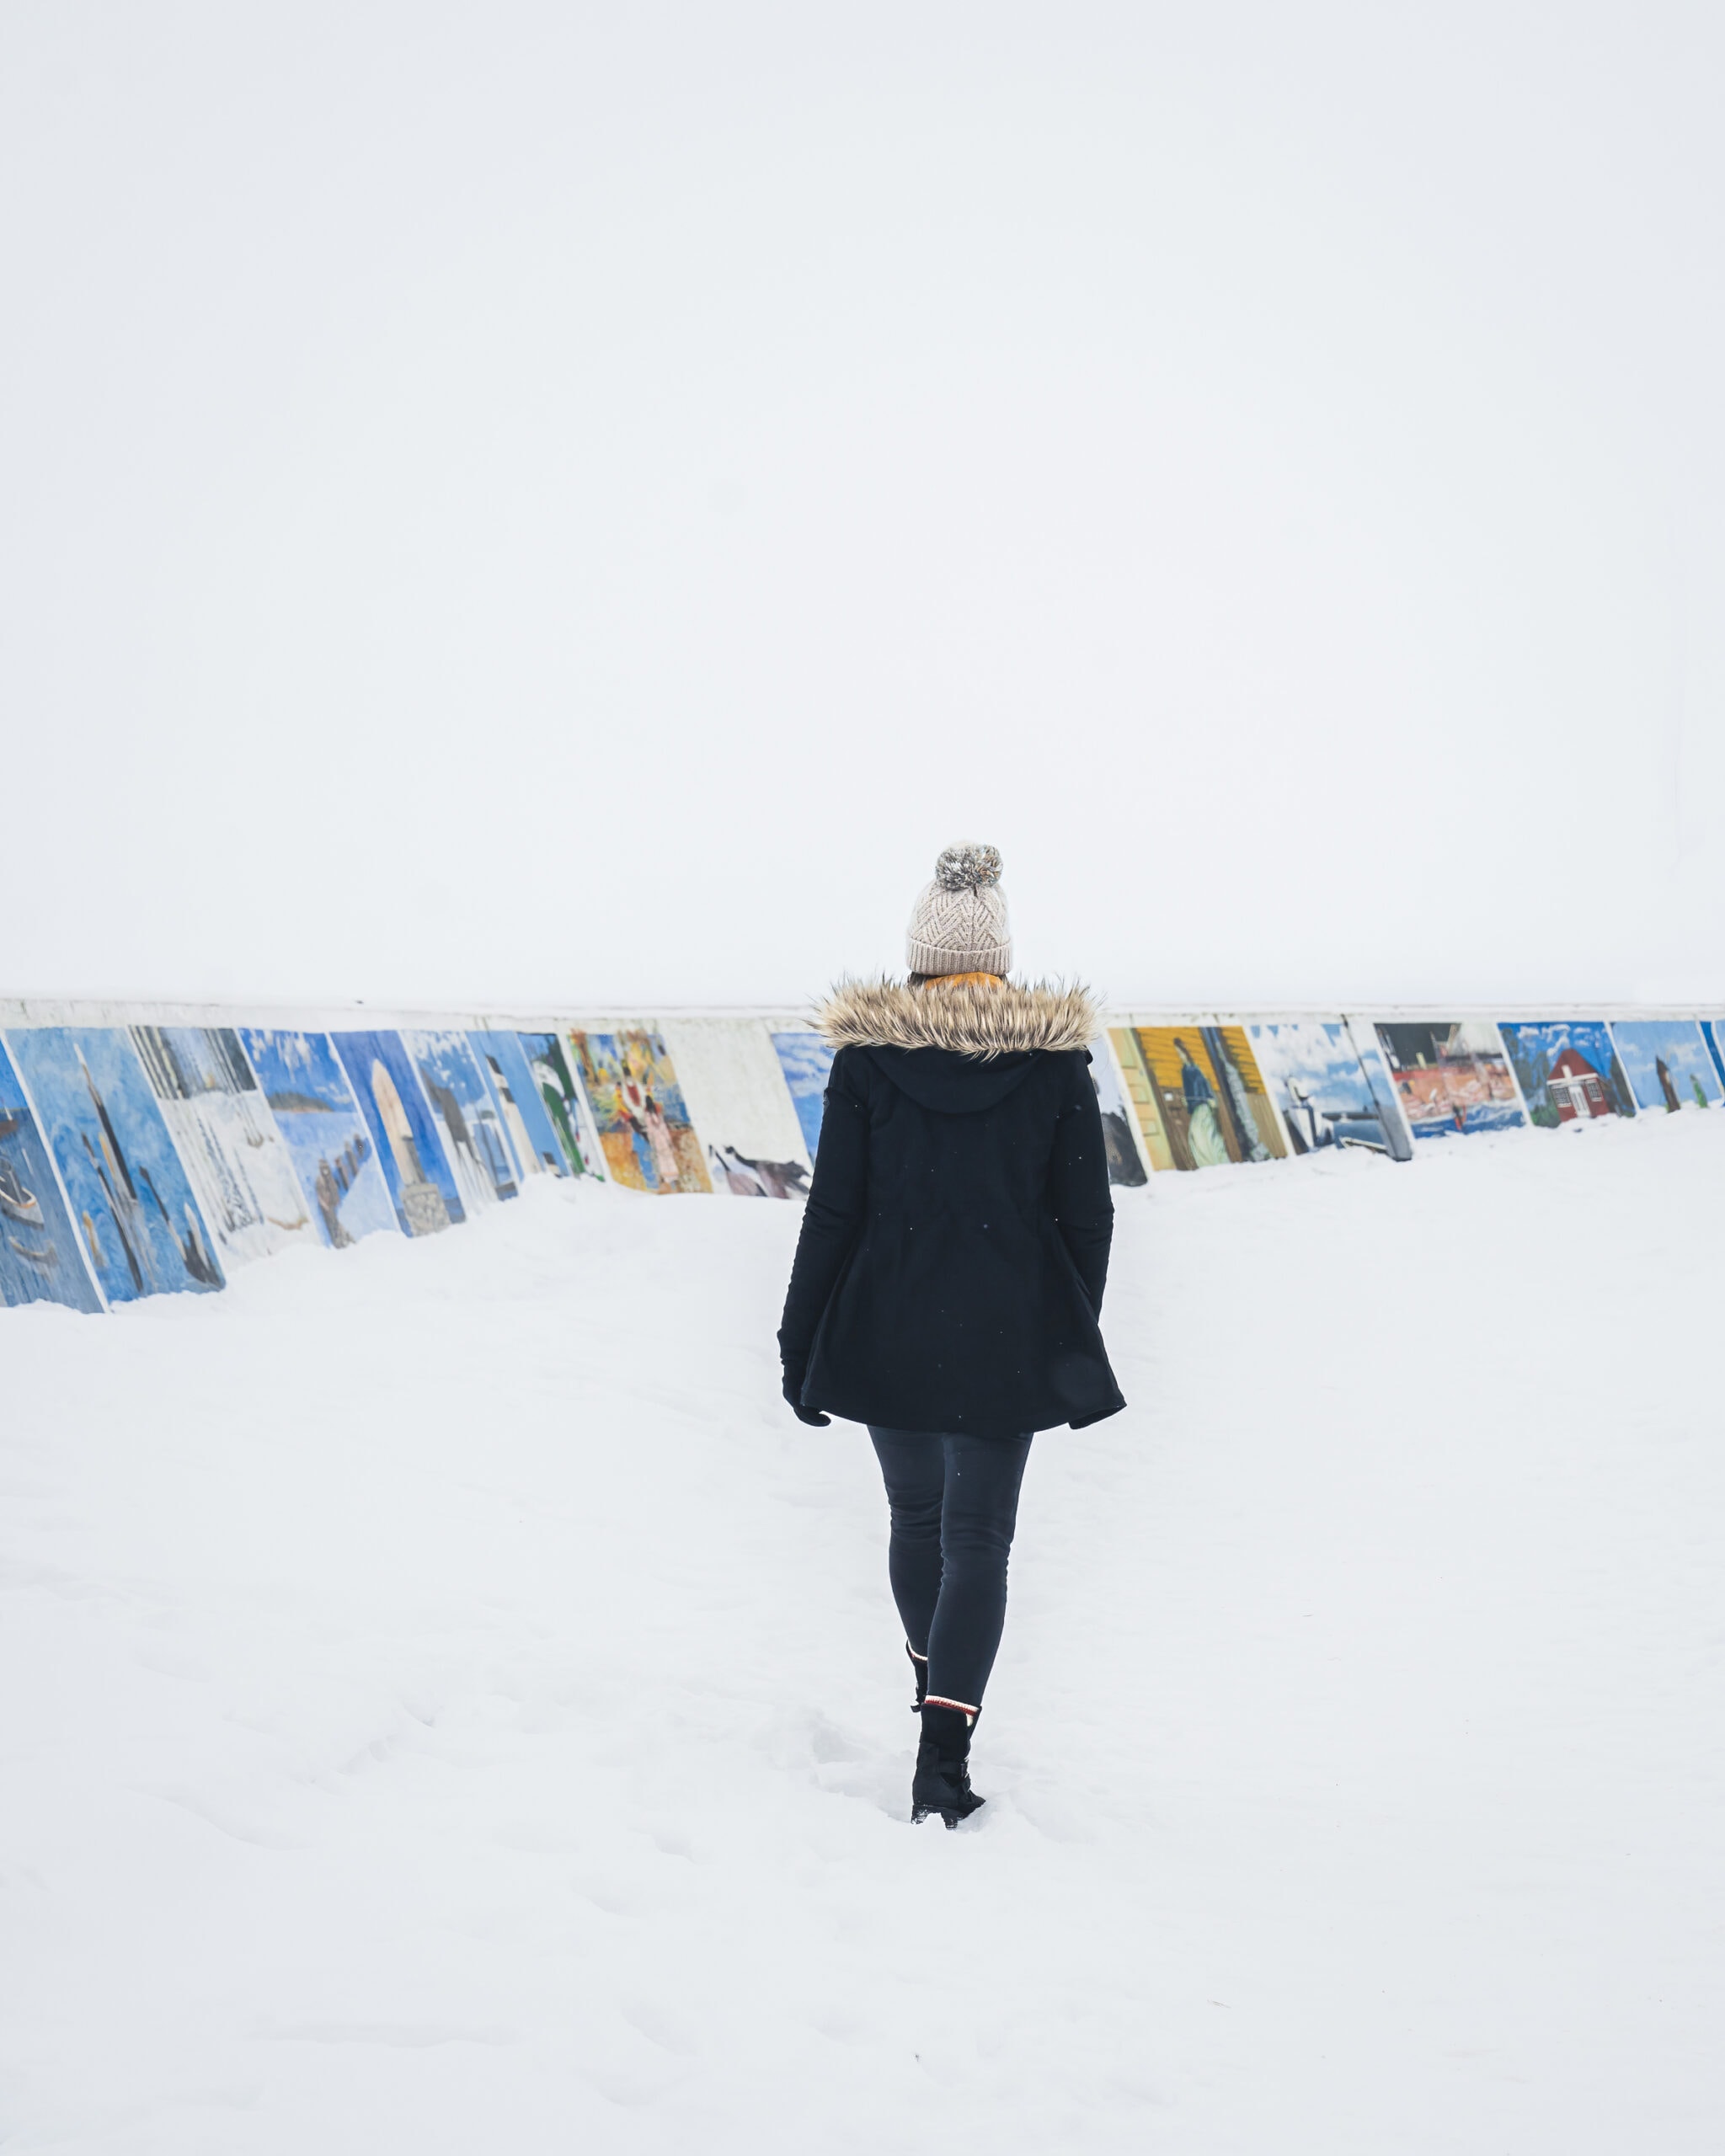 Walking along the seawall murals in Gimli Manitoba winter